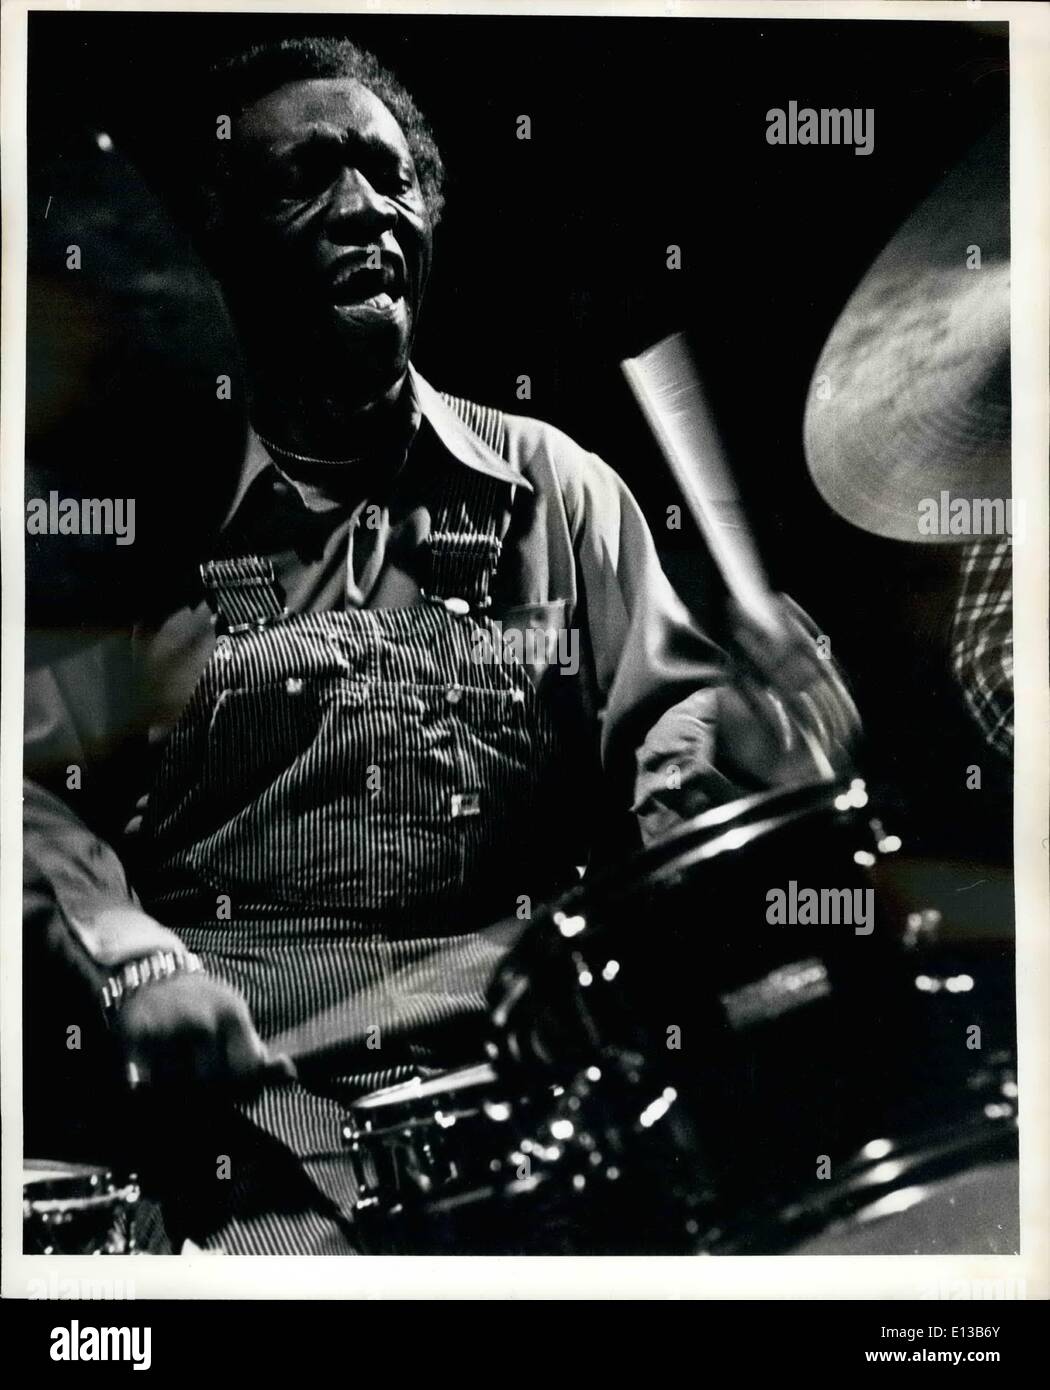 Febbraio 29, 2012 - Il batterista jazz arte Blakey effettuando al village gate night club, New York City, 1976. Foto Stock